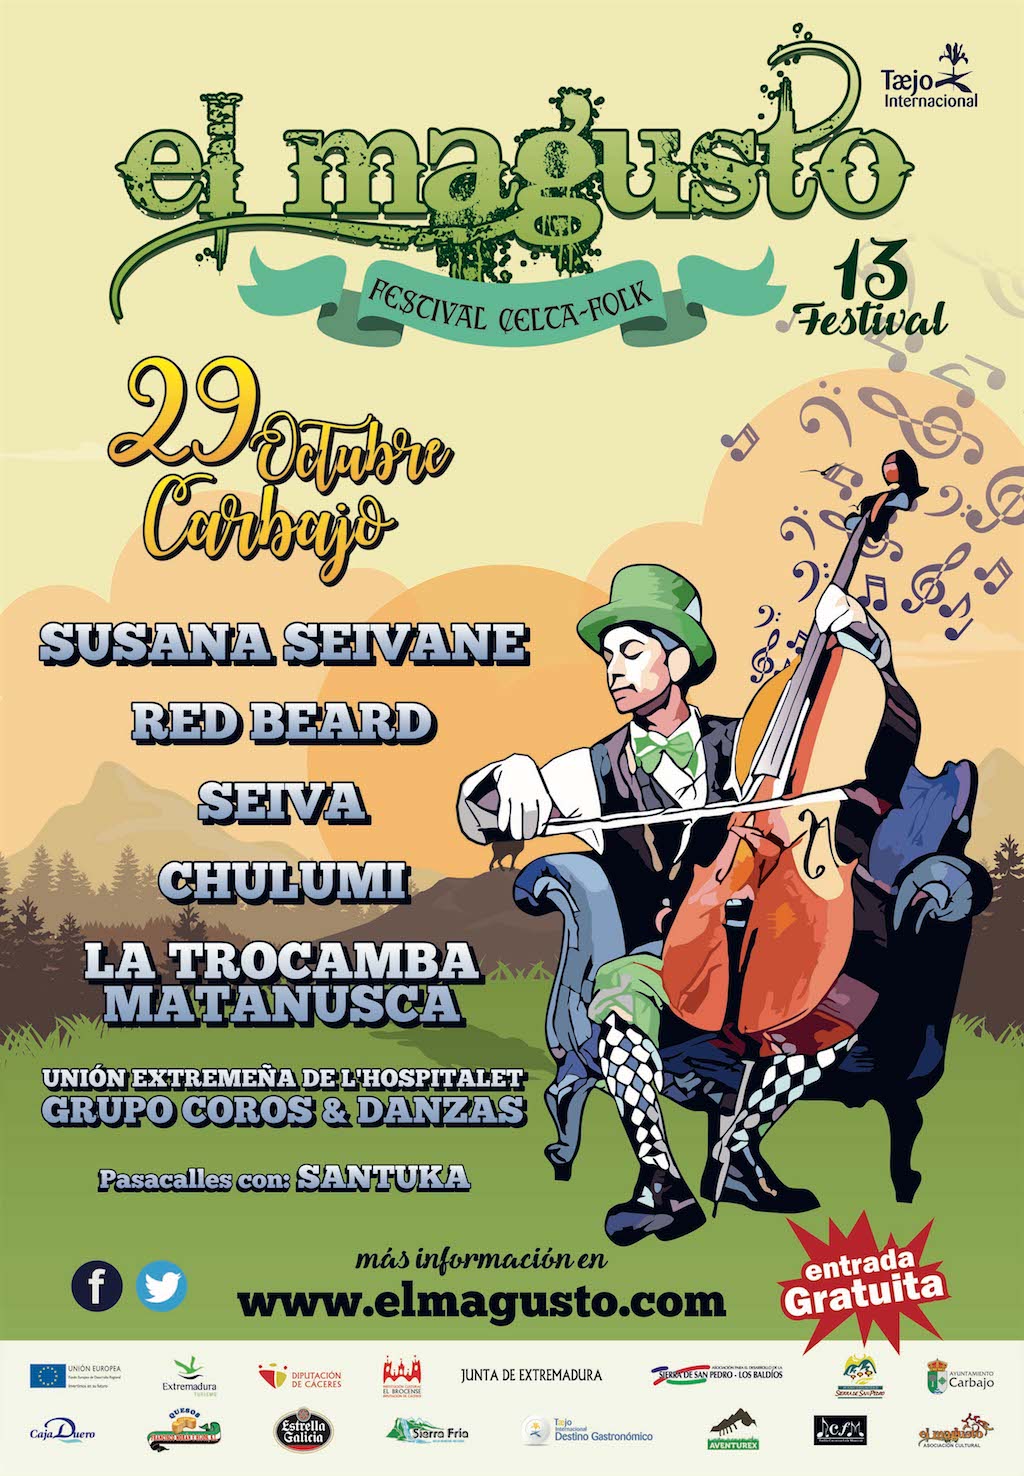 Cartel del Festival Celta-Folk "El Magusto" 2016